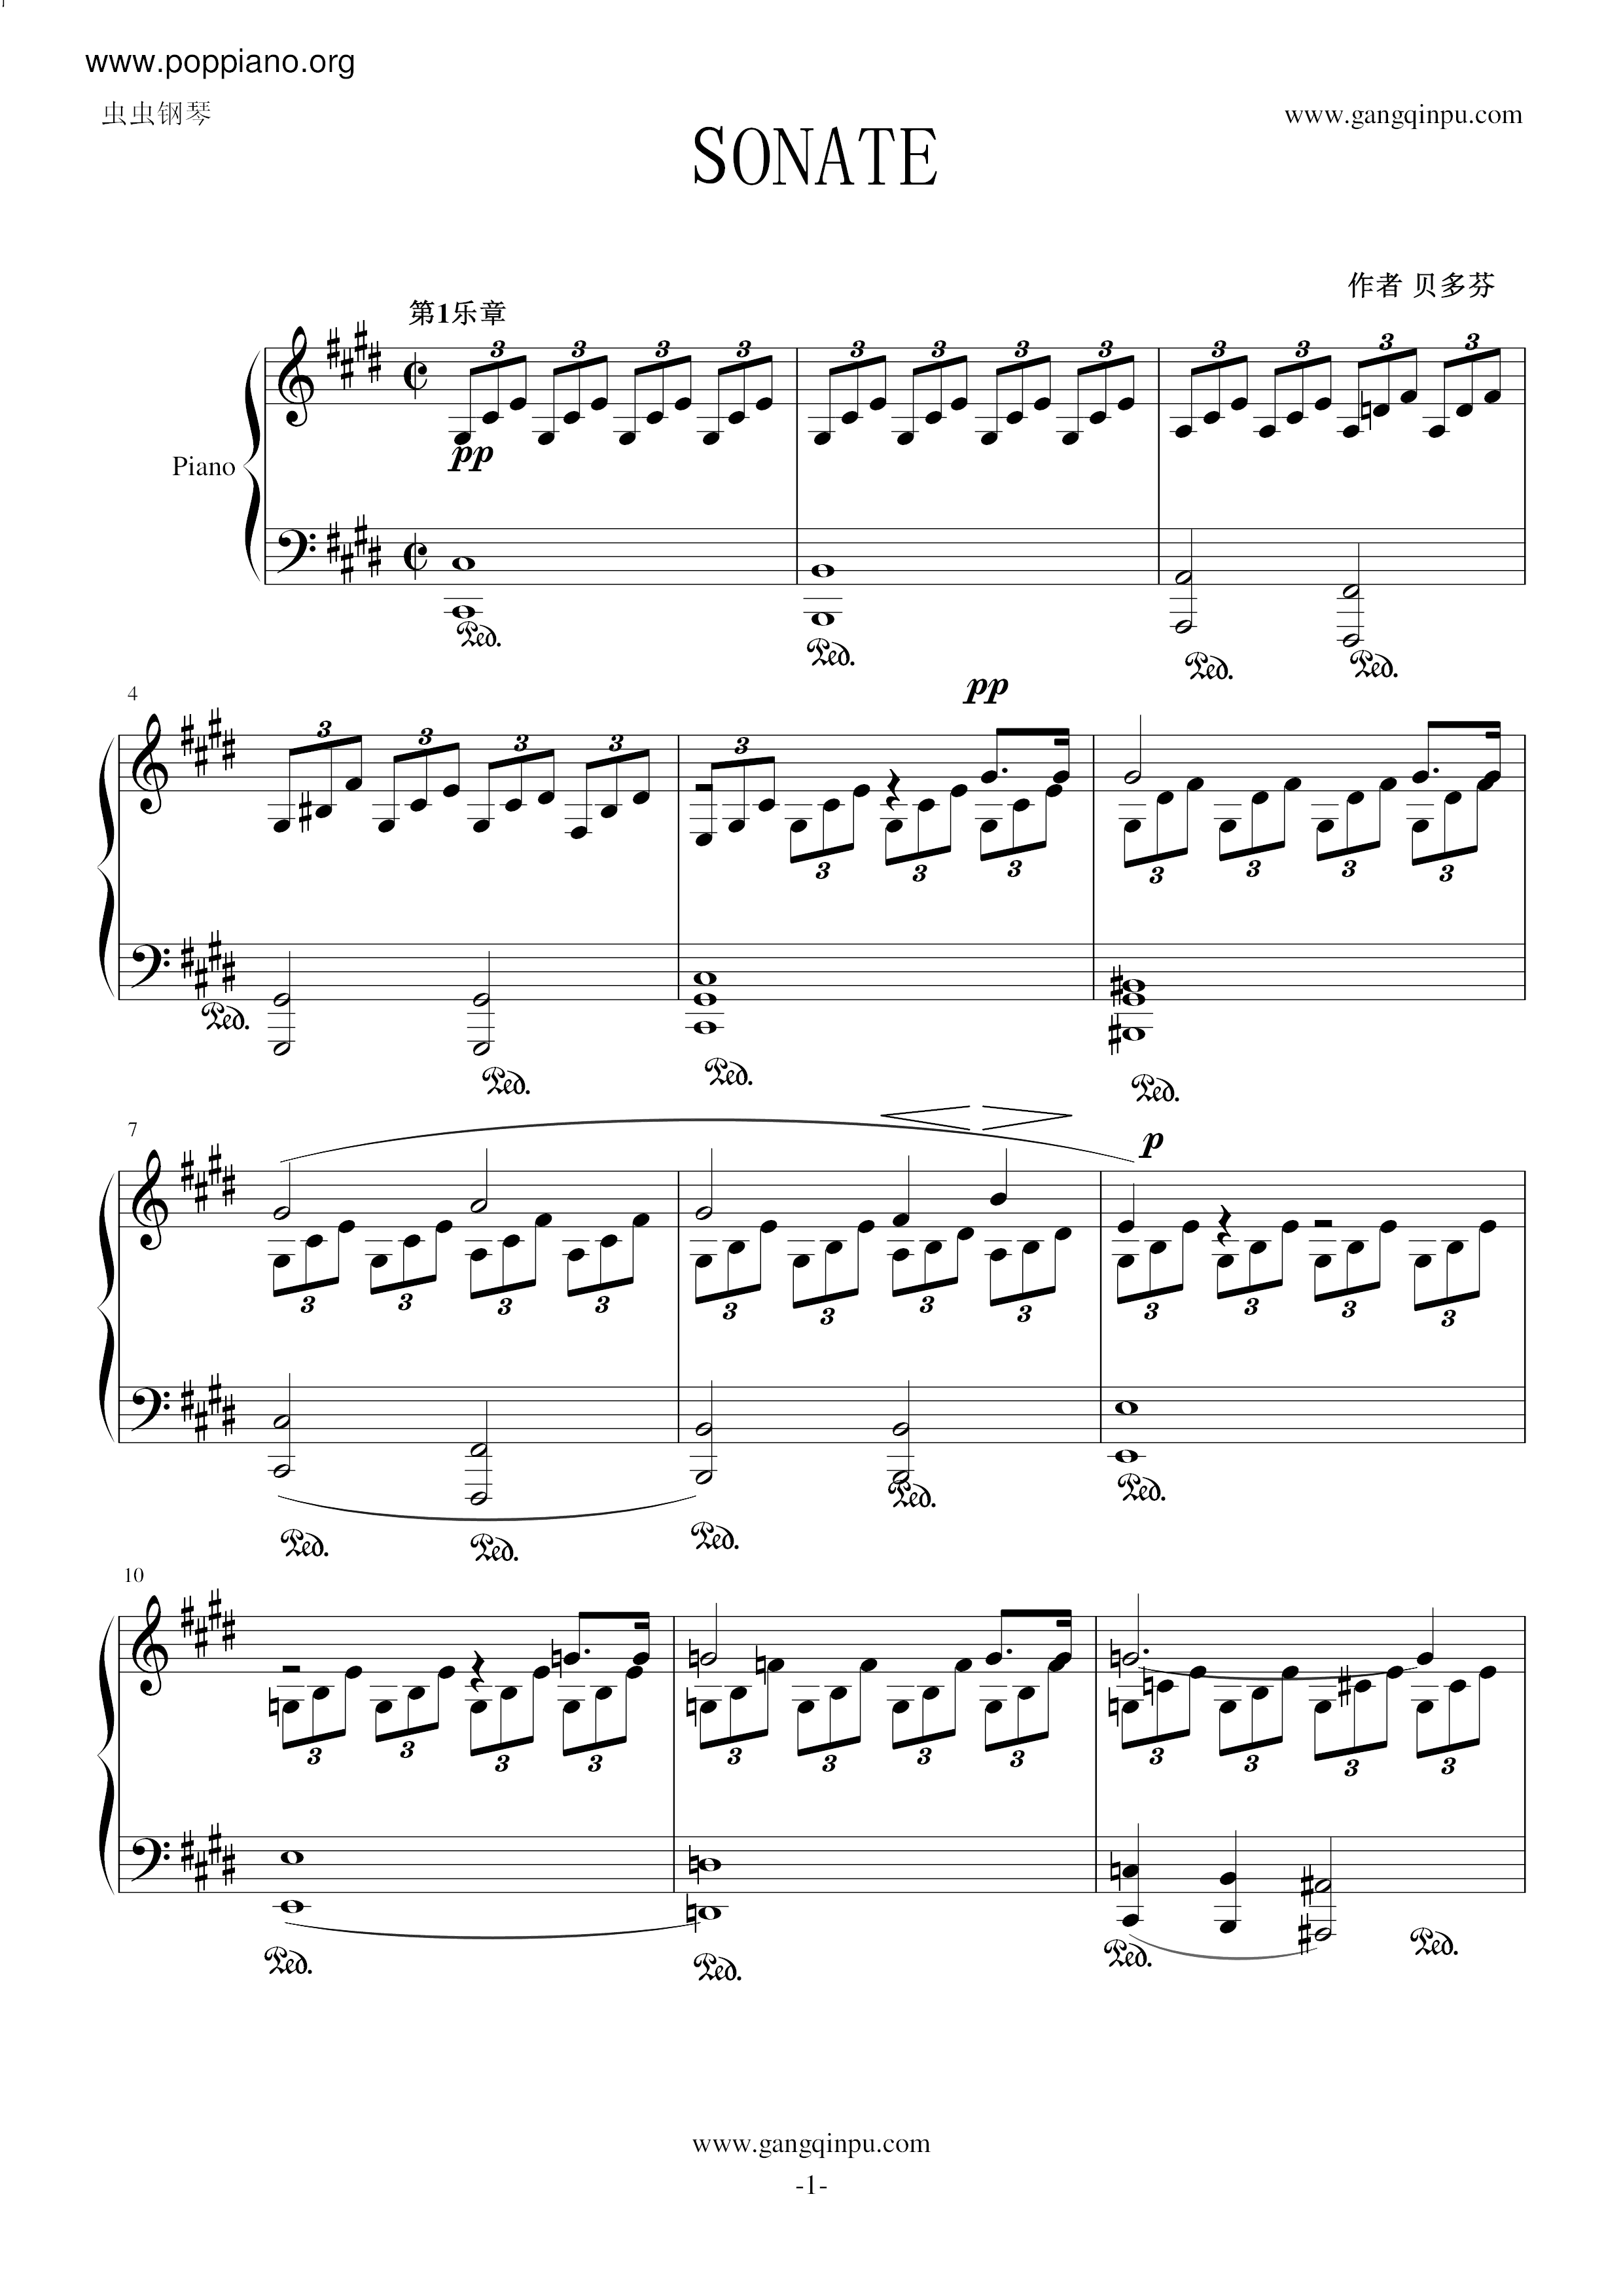 Moonlight Sonata 1&2 Score